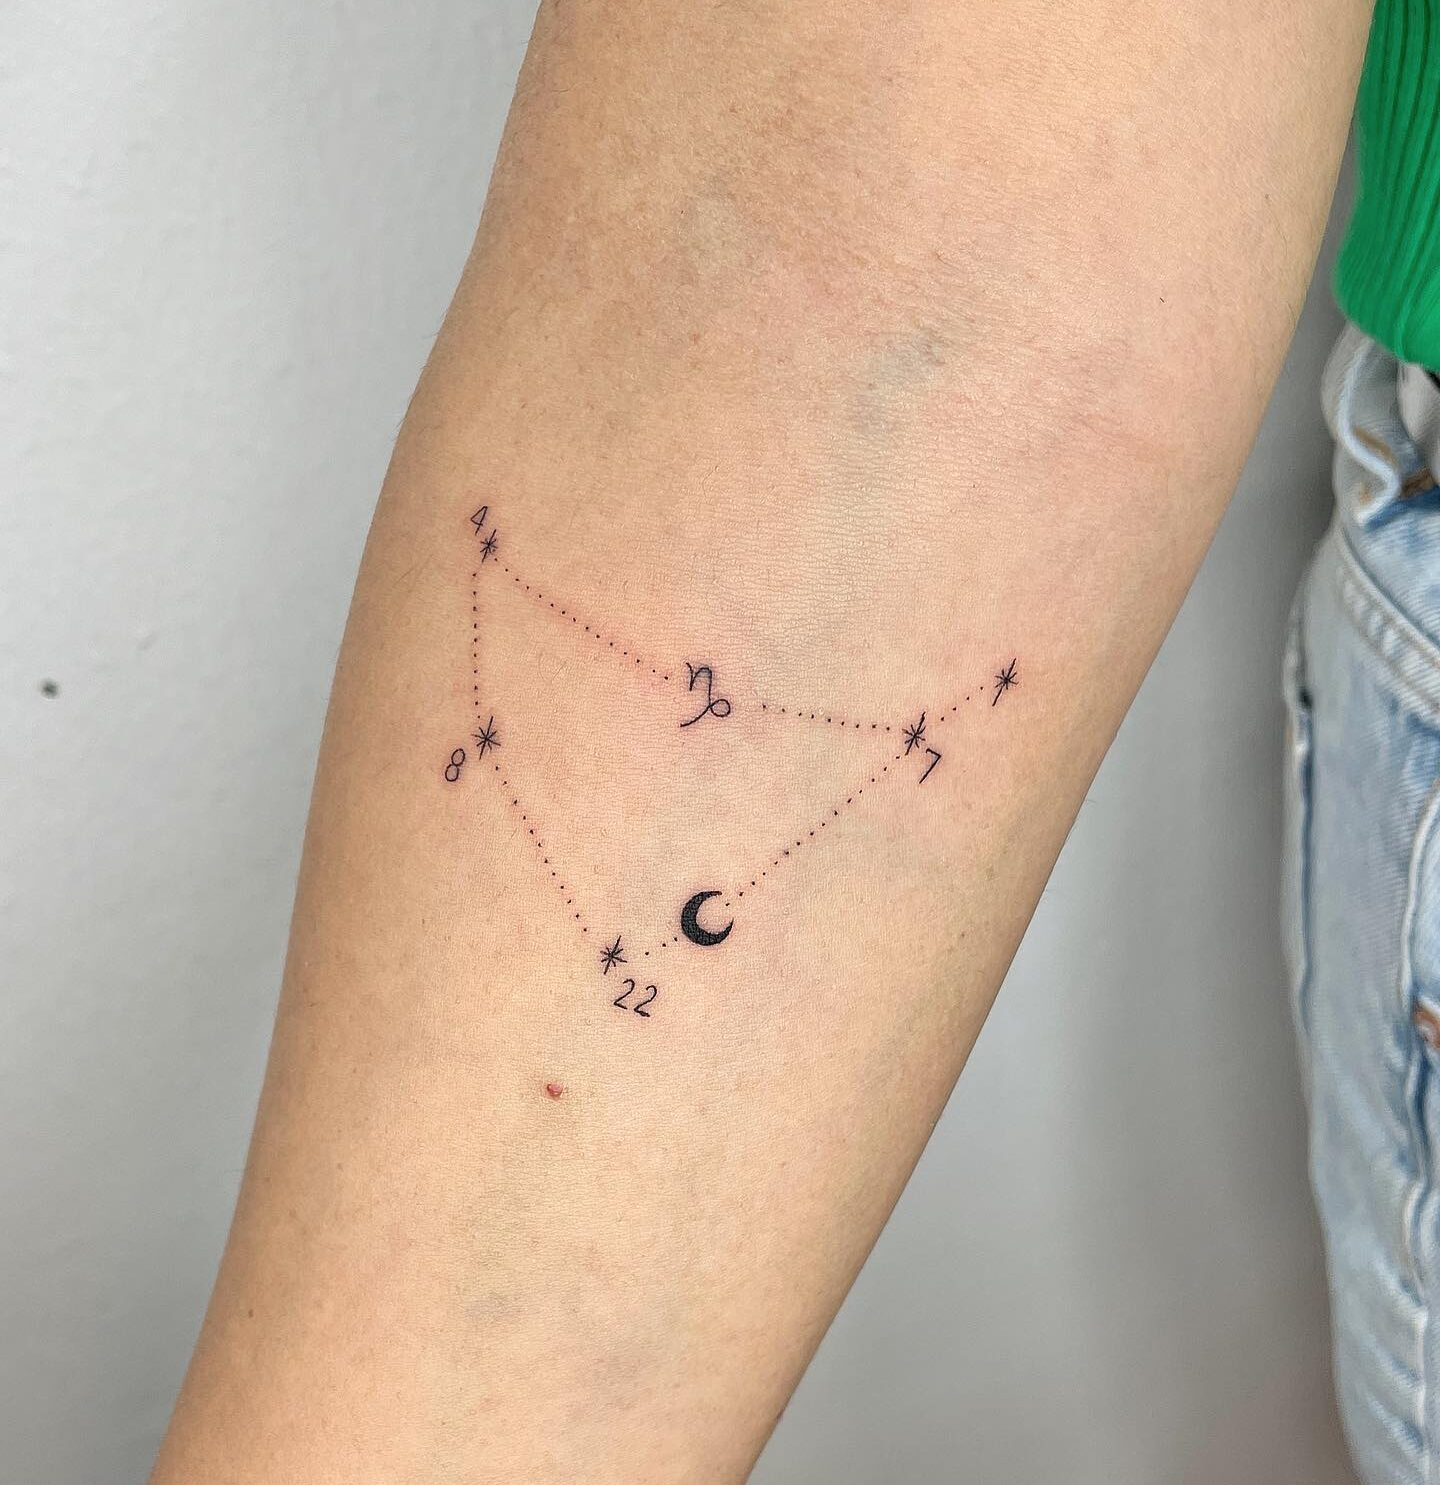 Capricornus constellation tattoo located on the inner forearm